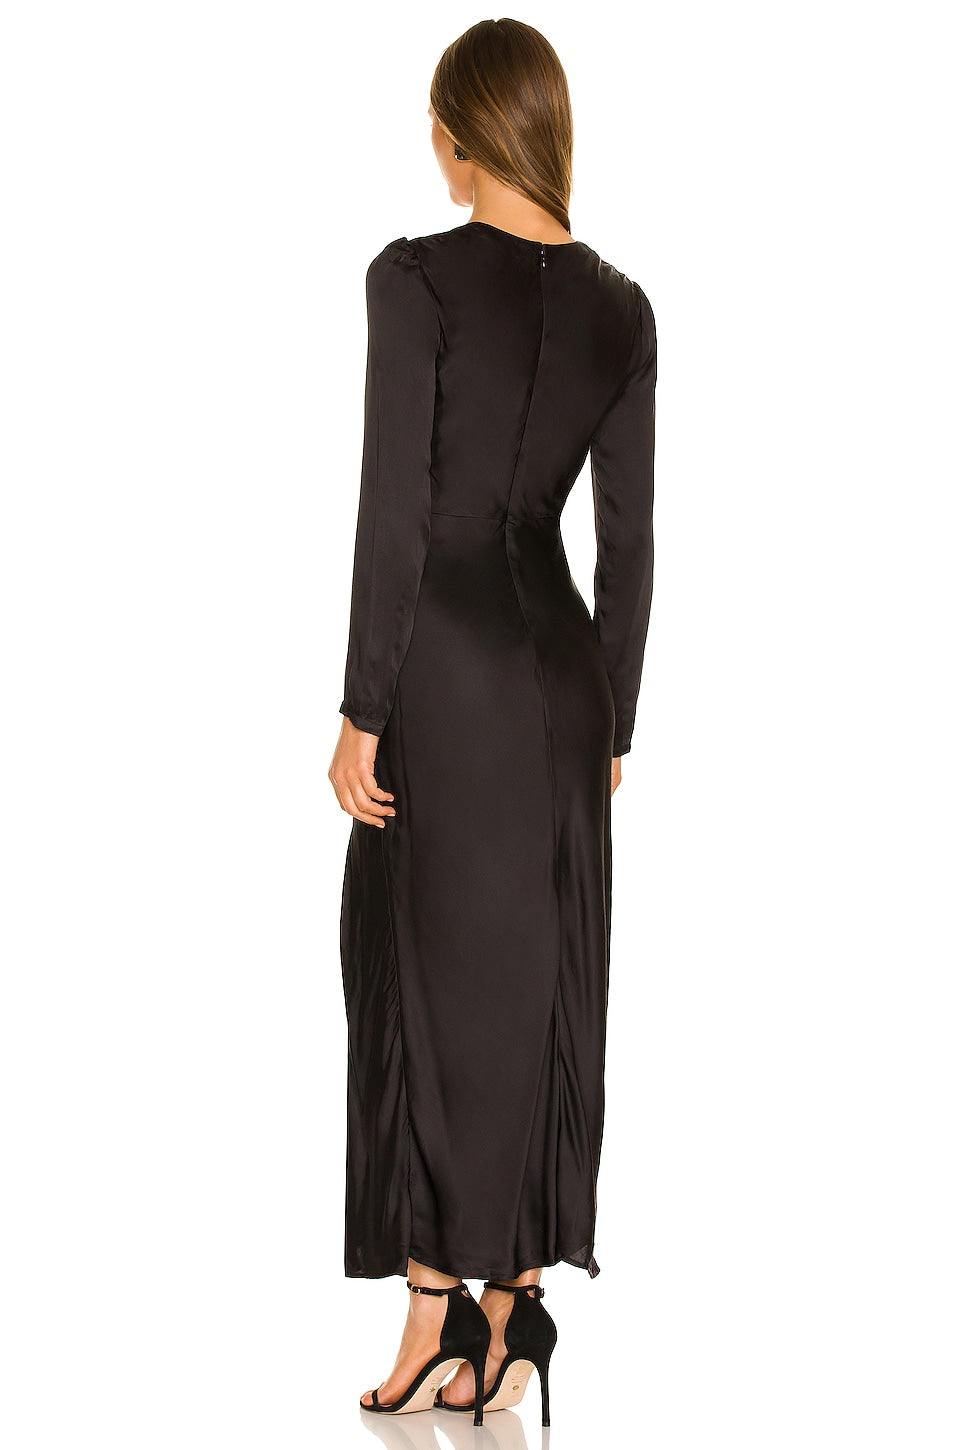 Bardot Lisette Maxi Dress in Black SIZE SMALL